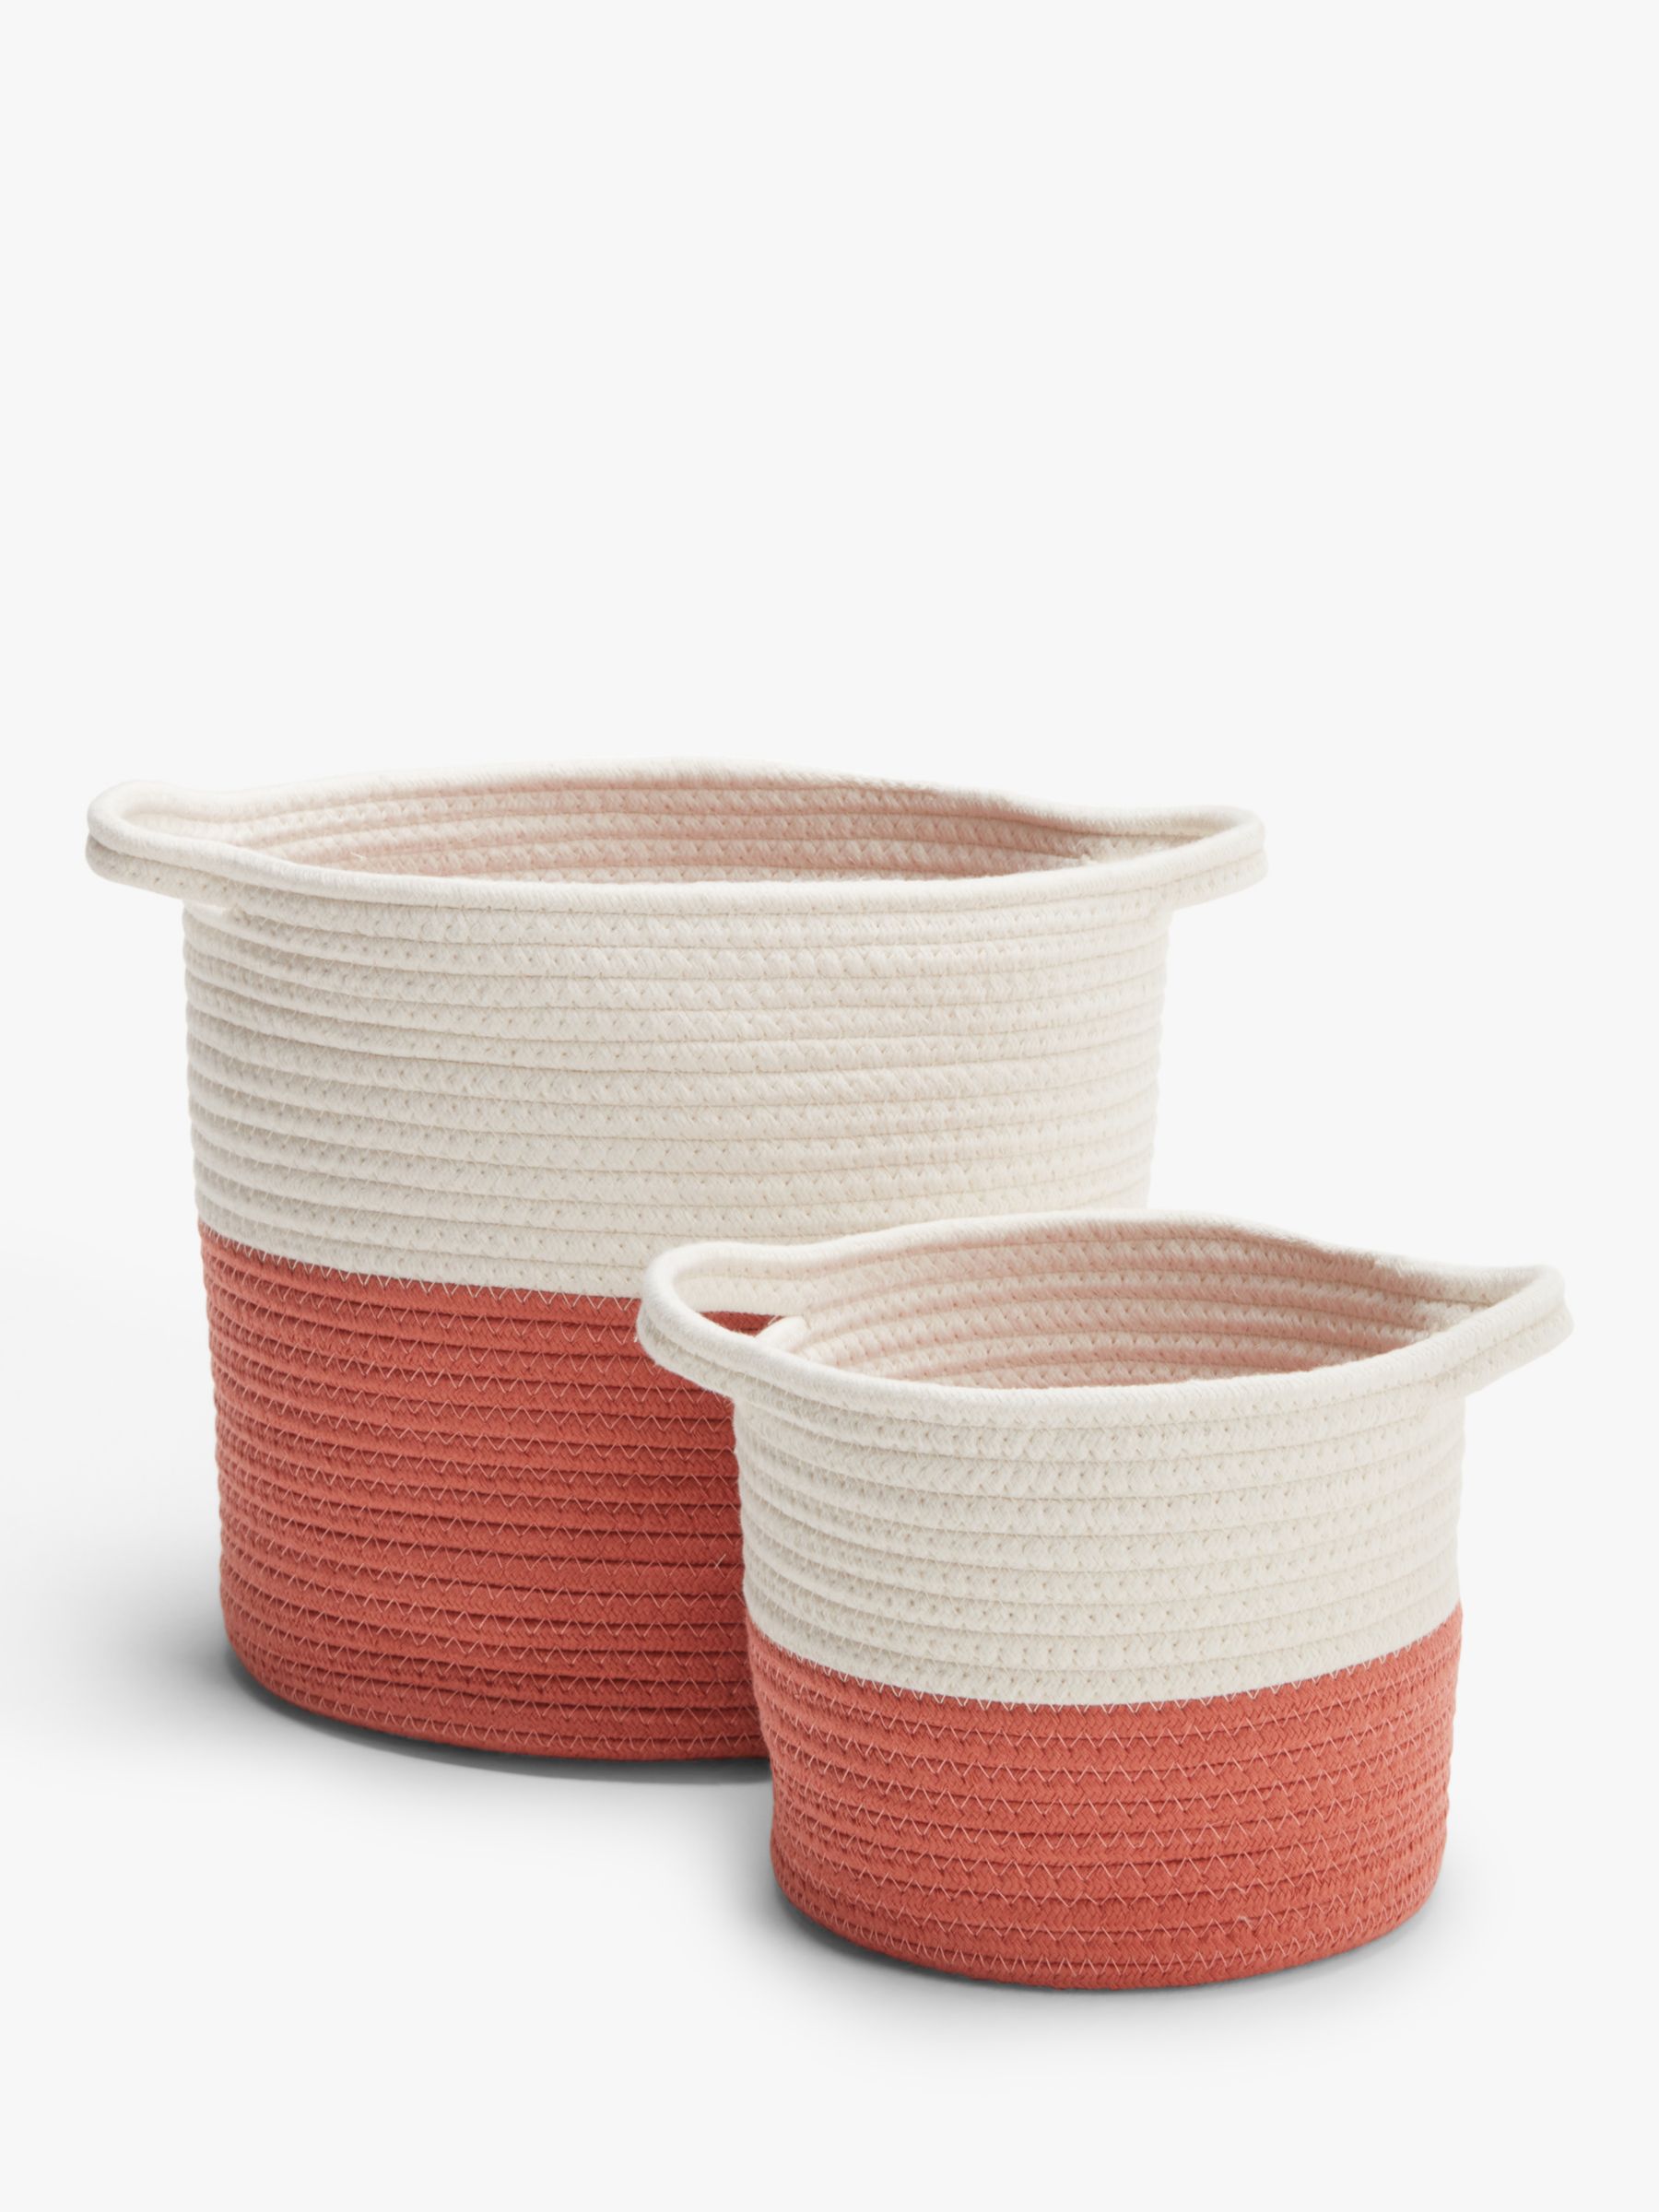 John Lewis ANYDAY Cotton Rope Storage Baskets, Set of 2